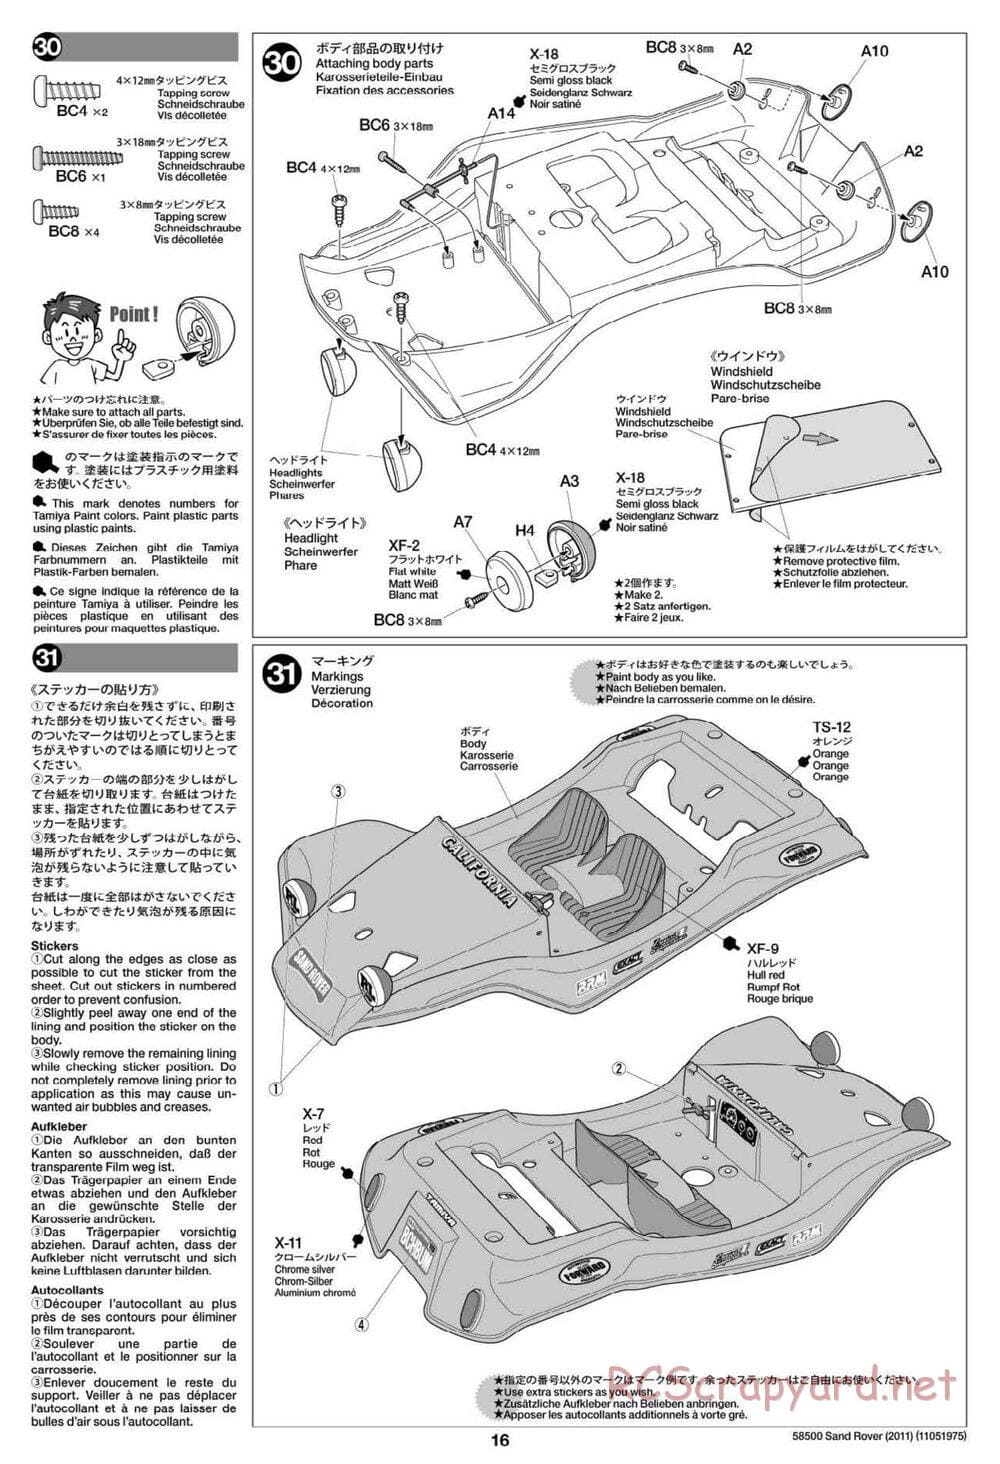 Tamiya - Sand Rover 2011 Chassis - Manual - Page 16